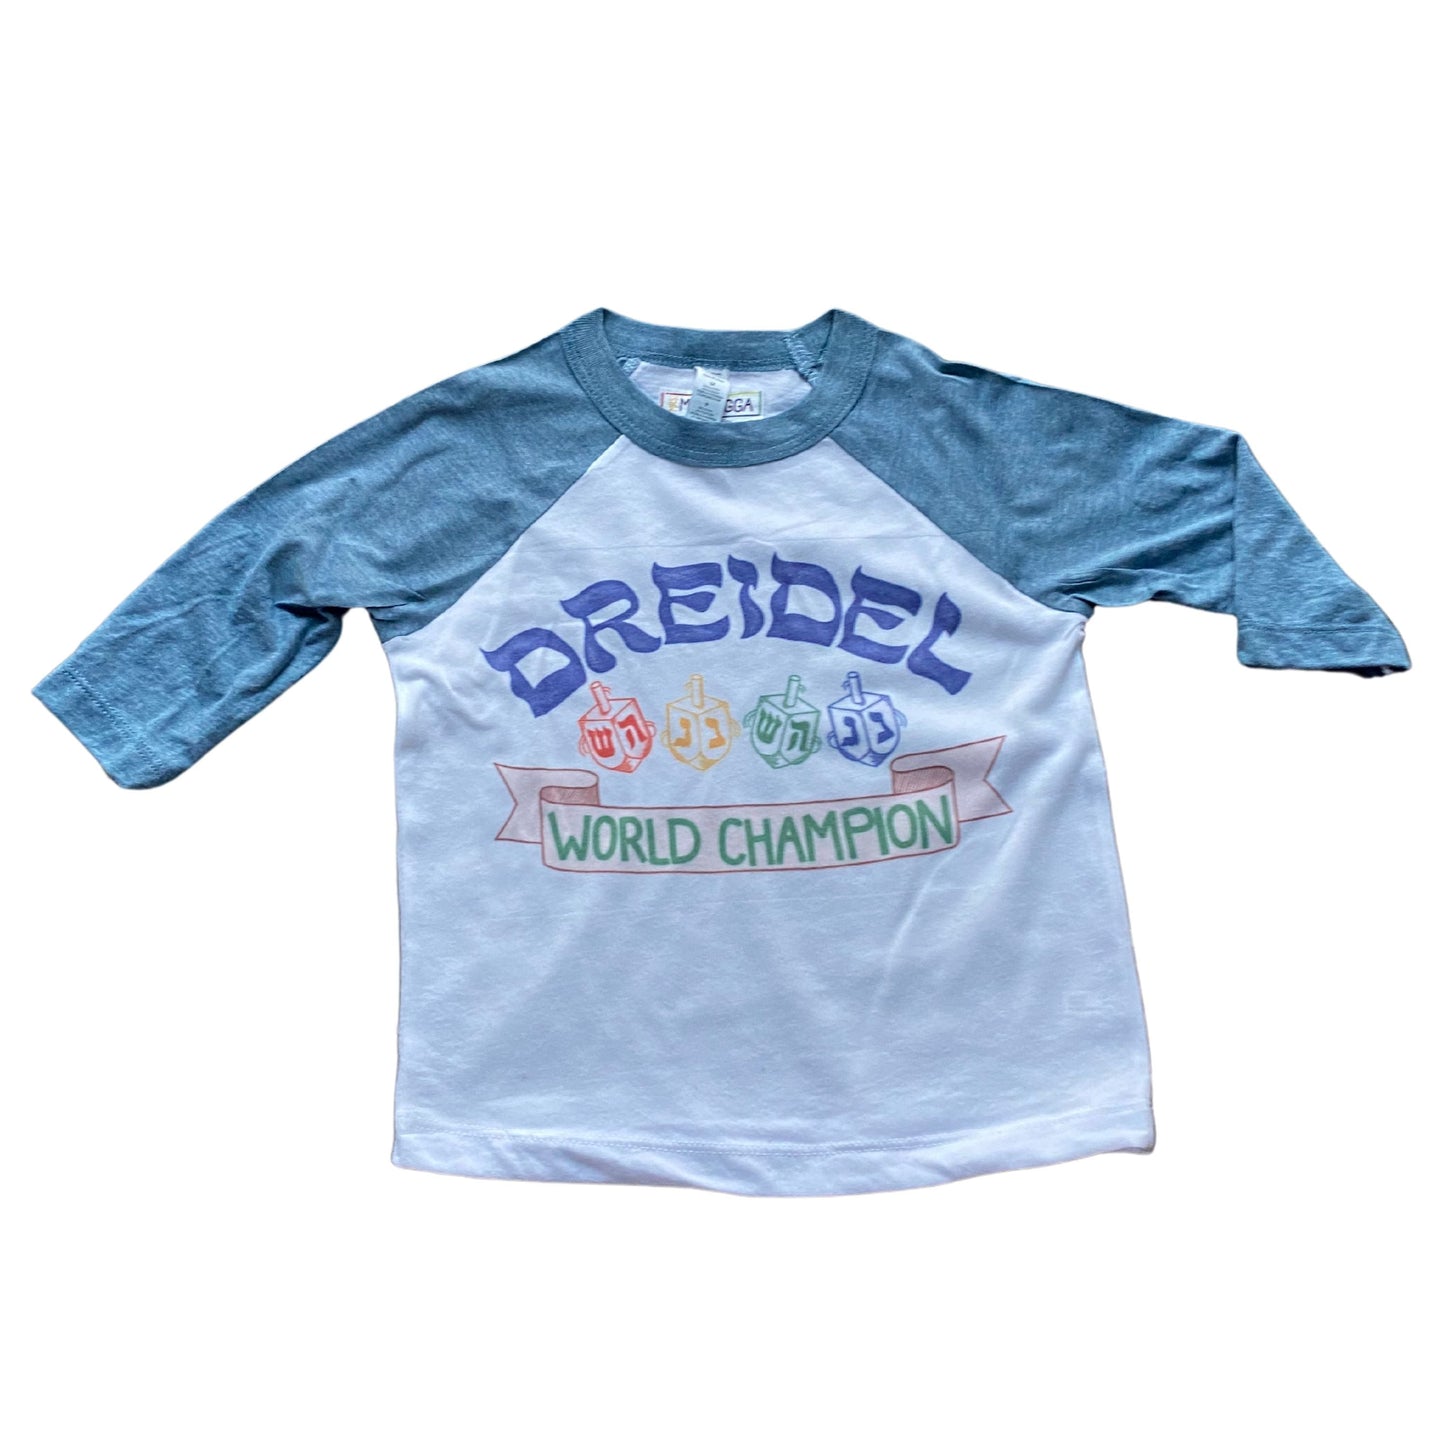 Dreidel Champ Baseball Shirt - Youth